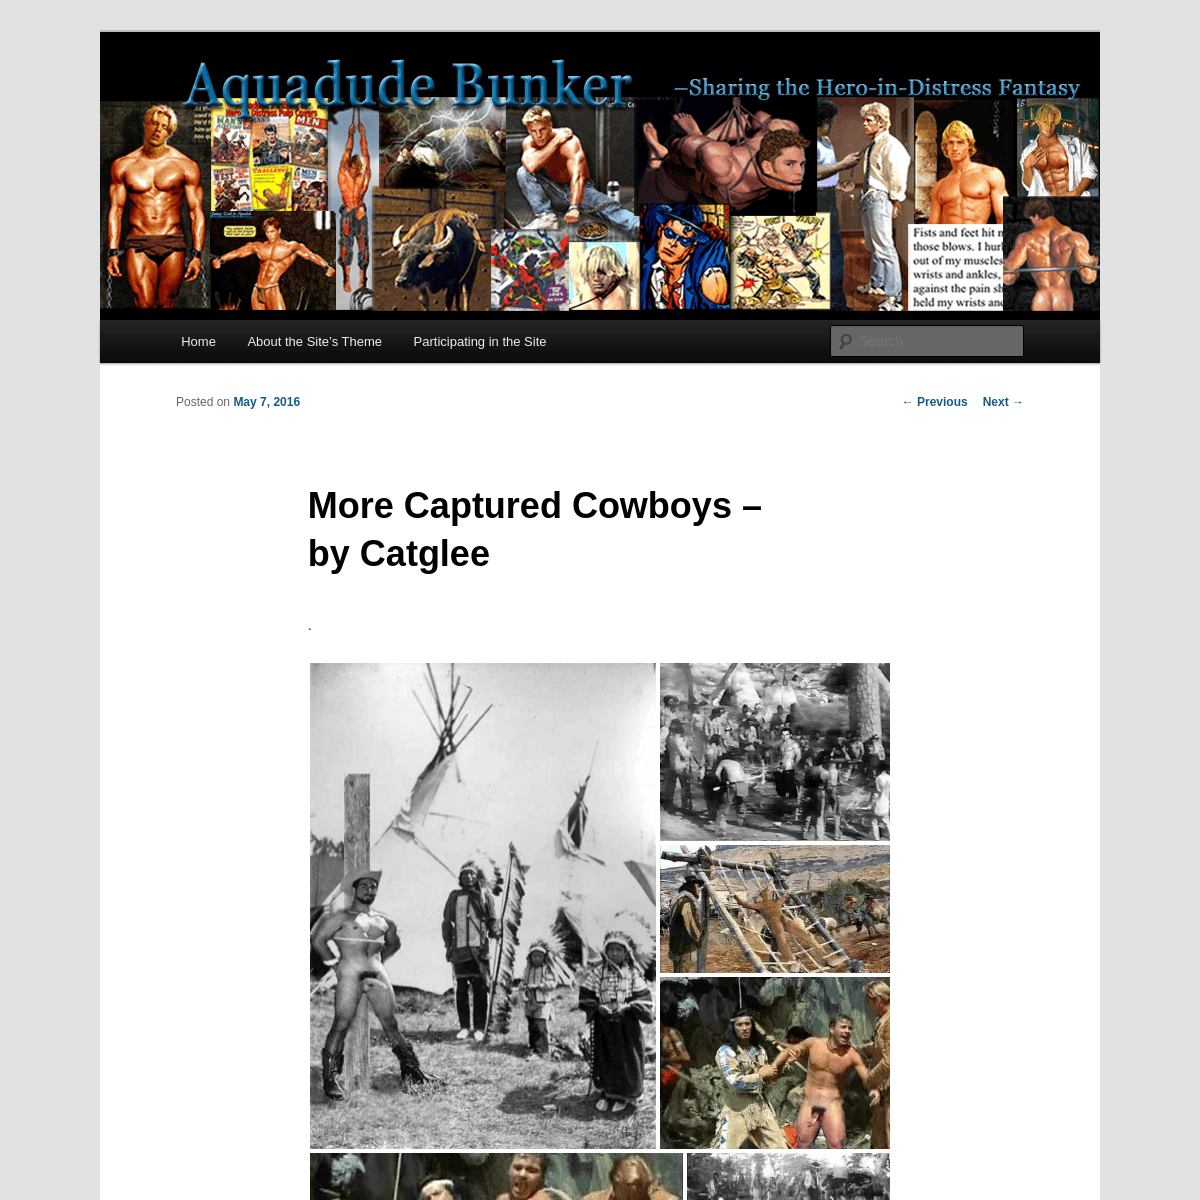 A complete backup of https://aquadude2001.wordpress.com/2016/05/07/more-captured-cowboys-by-catglee/